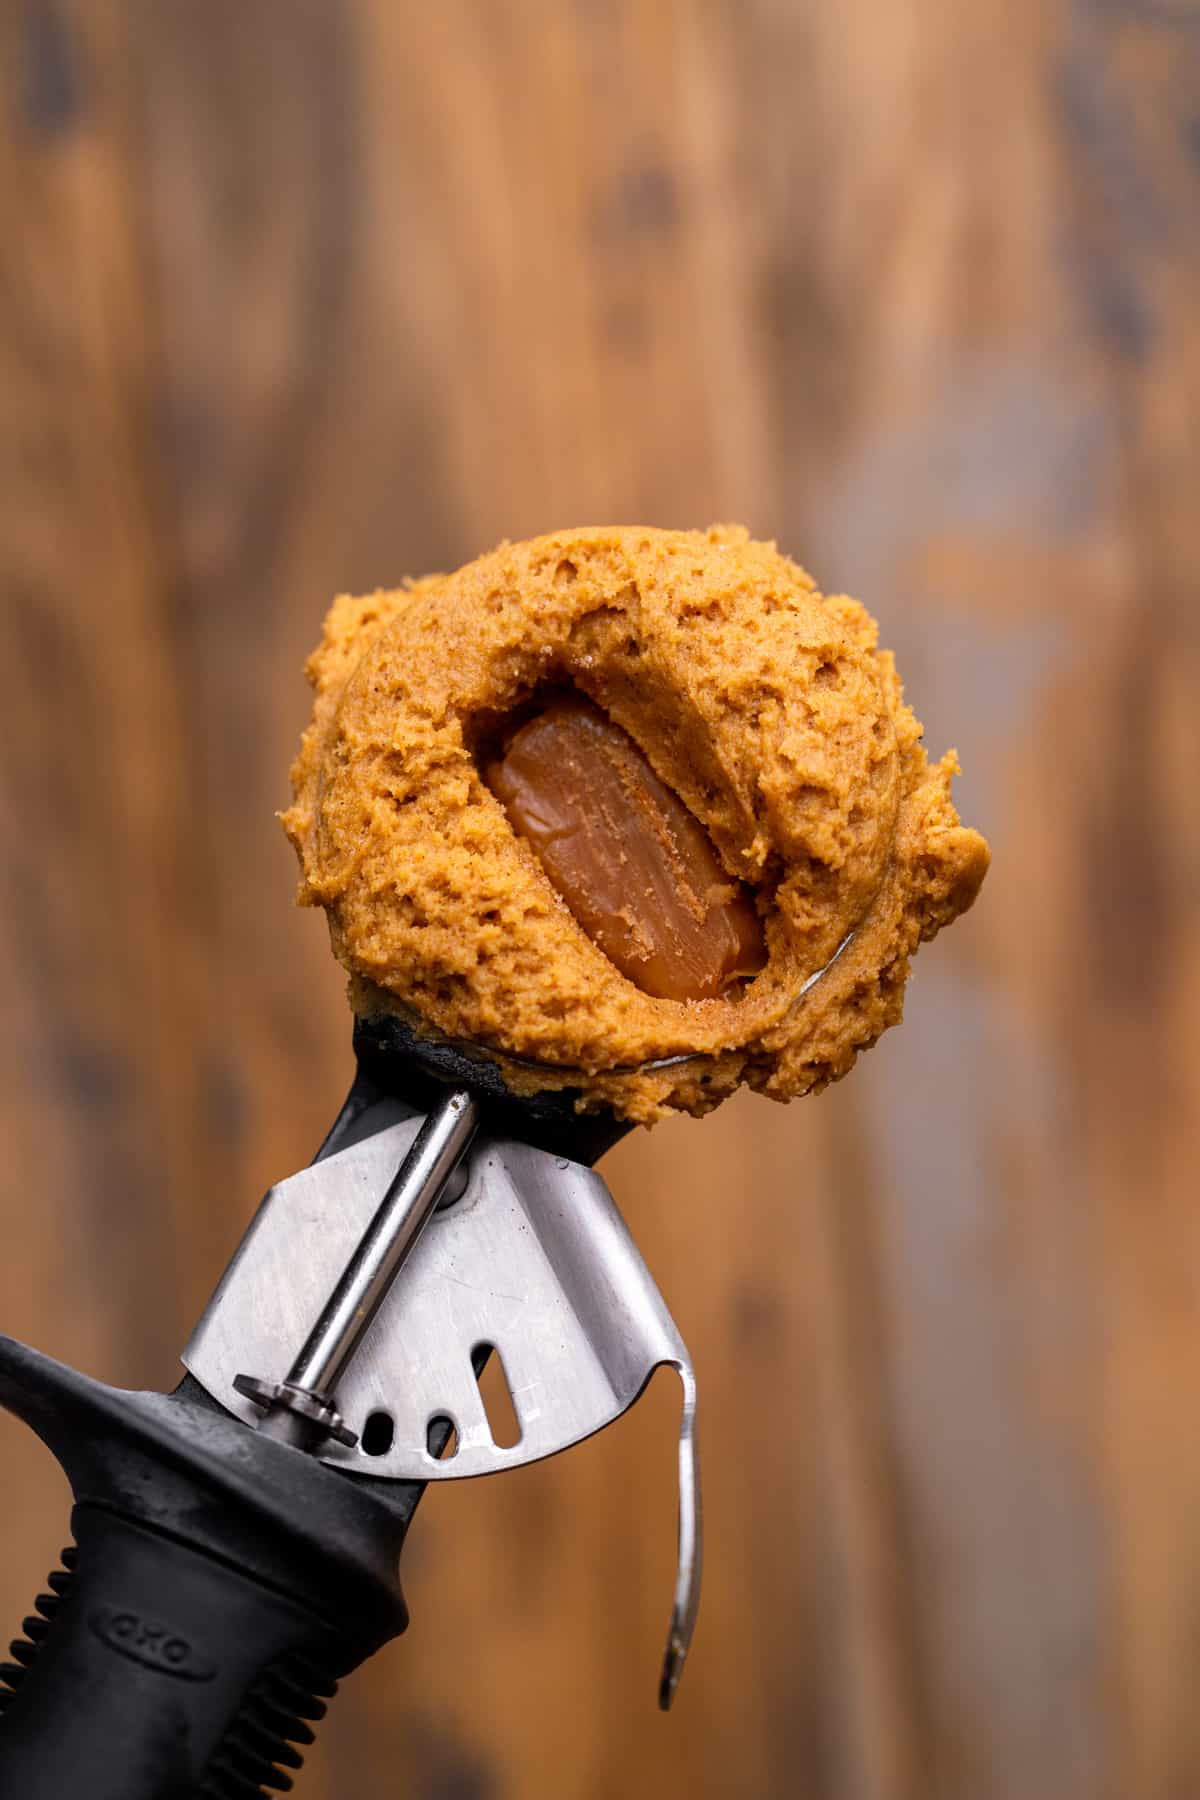 Caramel stuffed in a cookie dough ball.